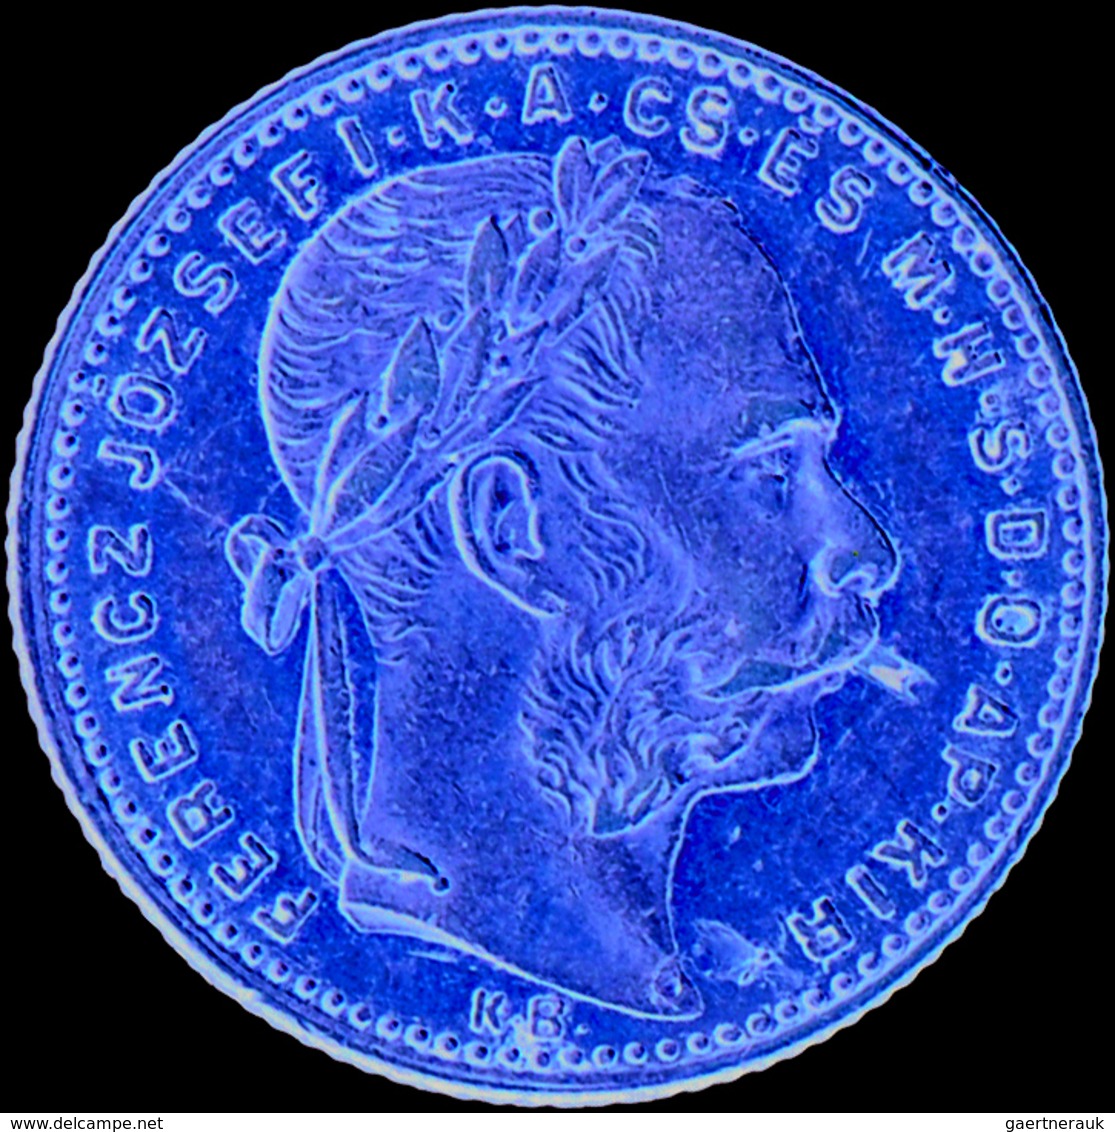 Ungarn - Anlagegold: Franz Josef I. 1848-1916: Lot 2 Goldmünzen: 4 Forint - 10 Francs 1888, KM # 466 - Hungary